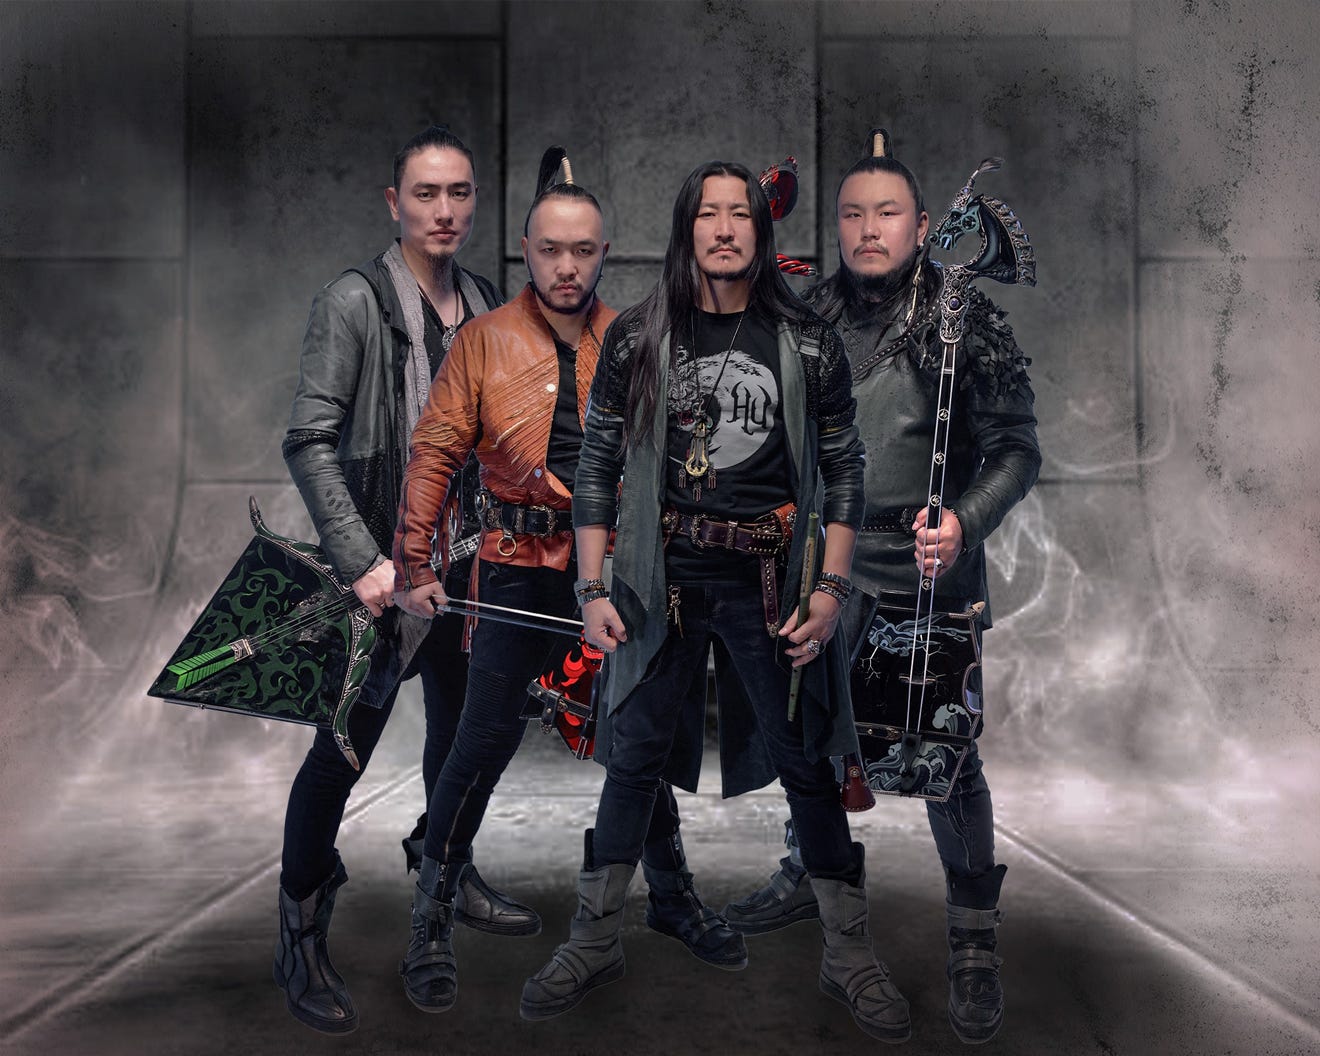 Meet The HU, a Mongolian metal band performing at Coachella